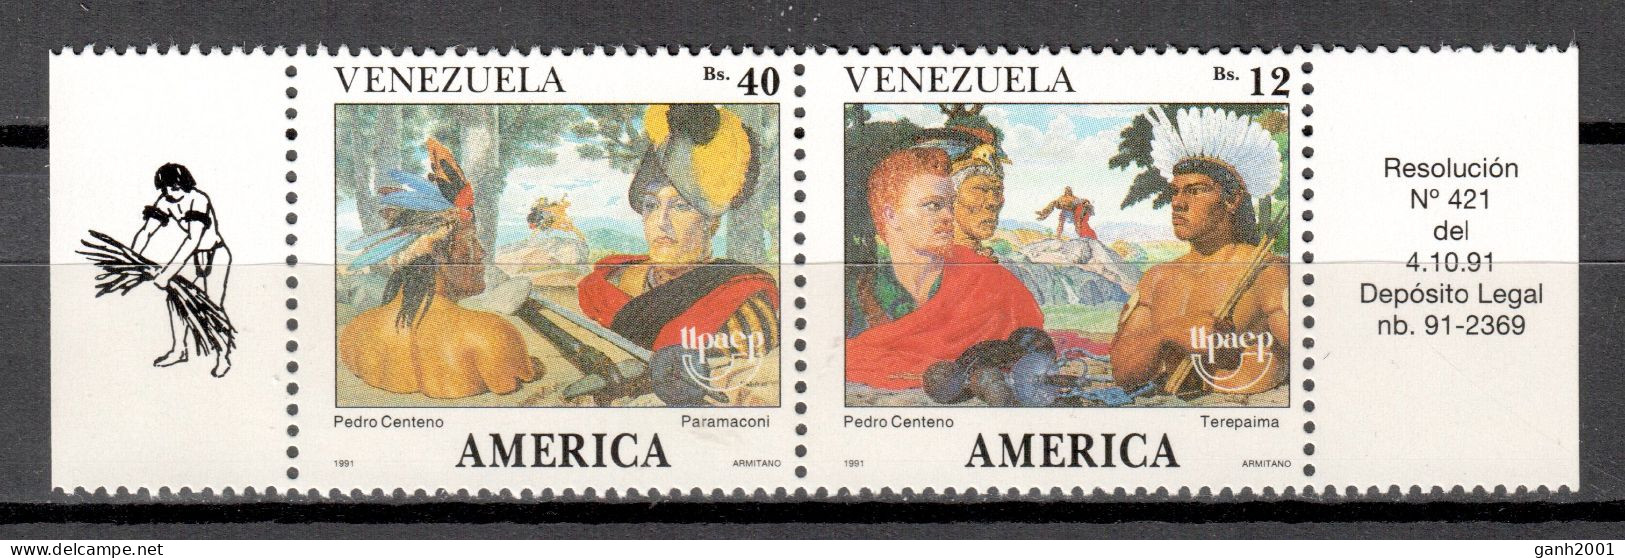 Venezuela 1991 / America UPAEP The World The Conquerors Found MNH / Em31  27-5 - Emissions Communes